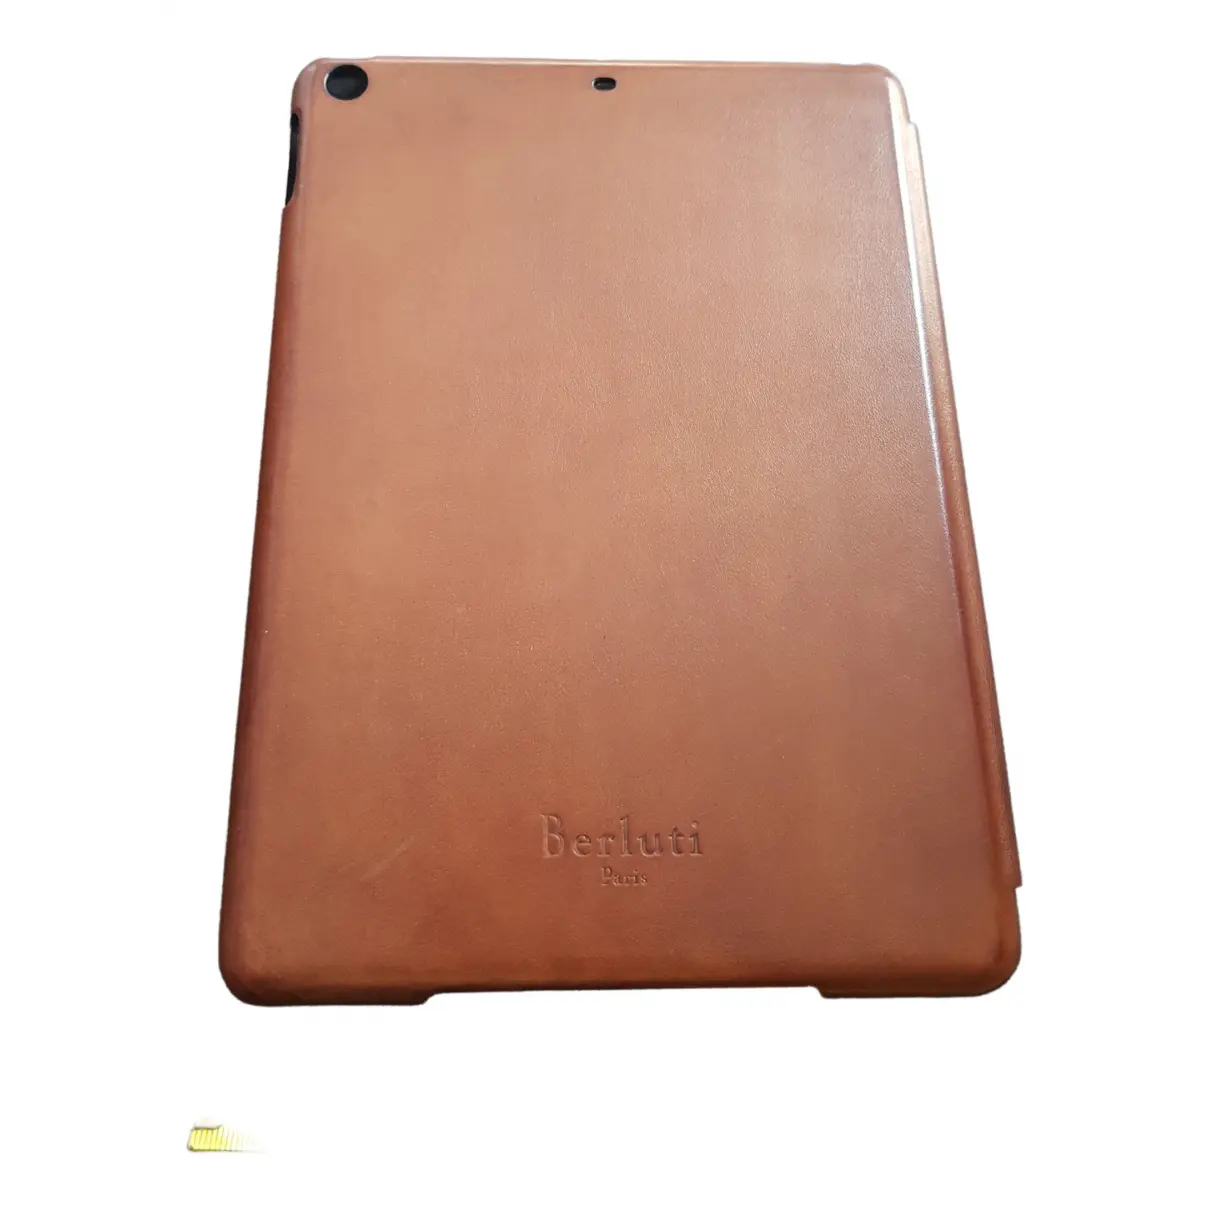 Leather ipad case Berluti